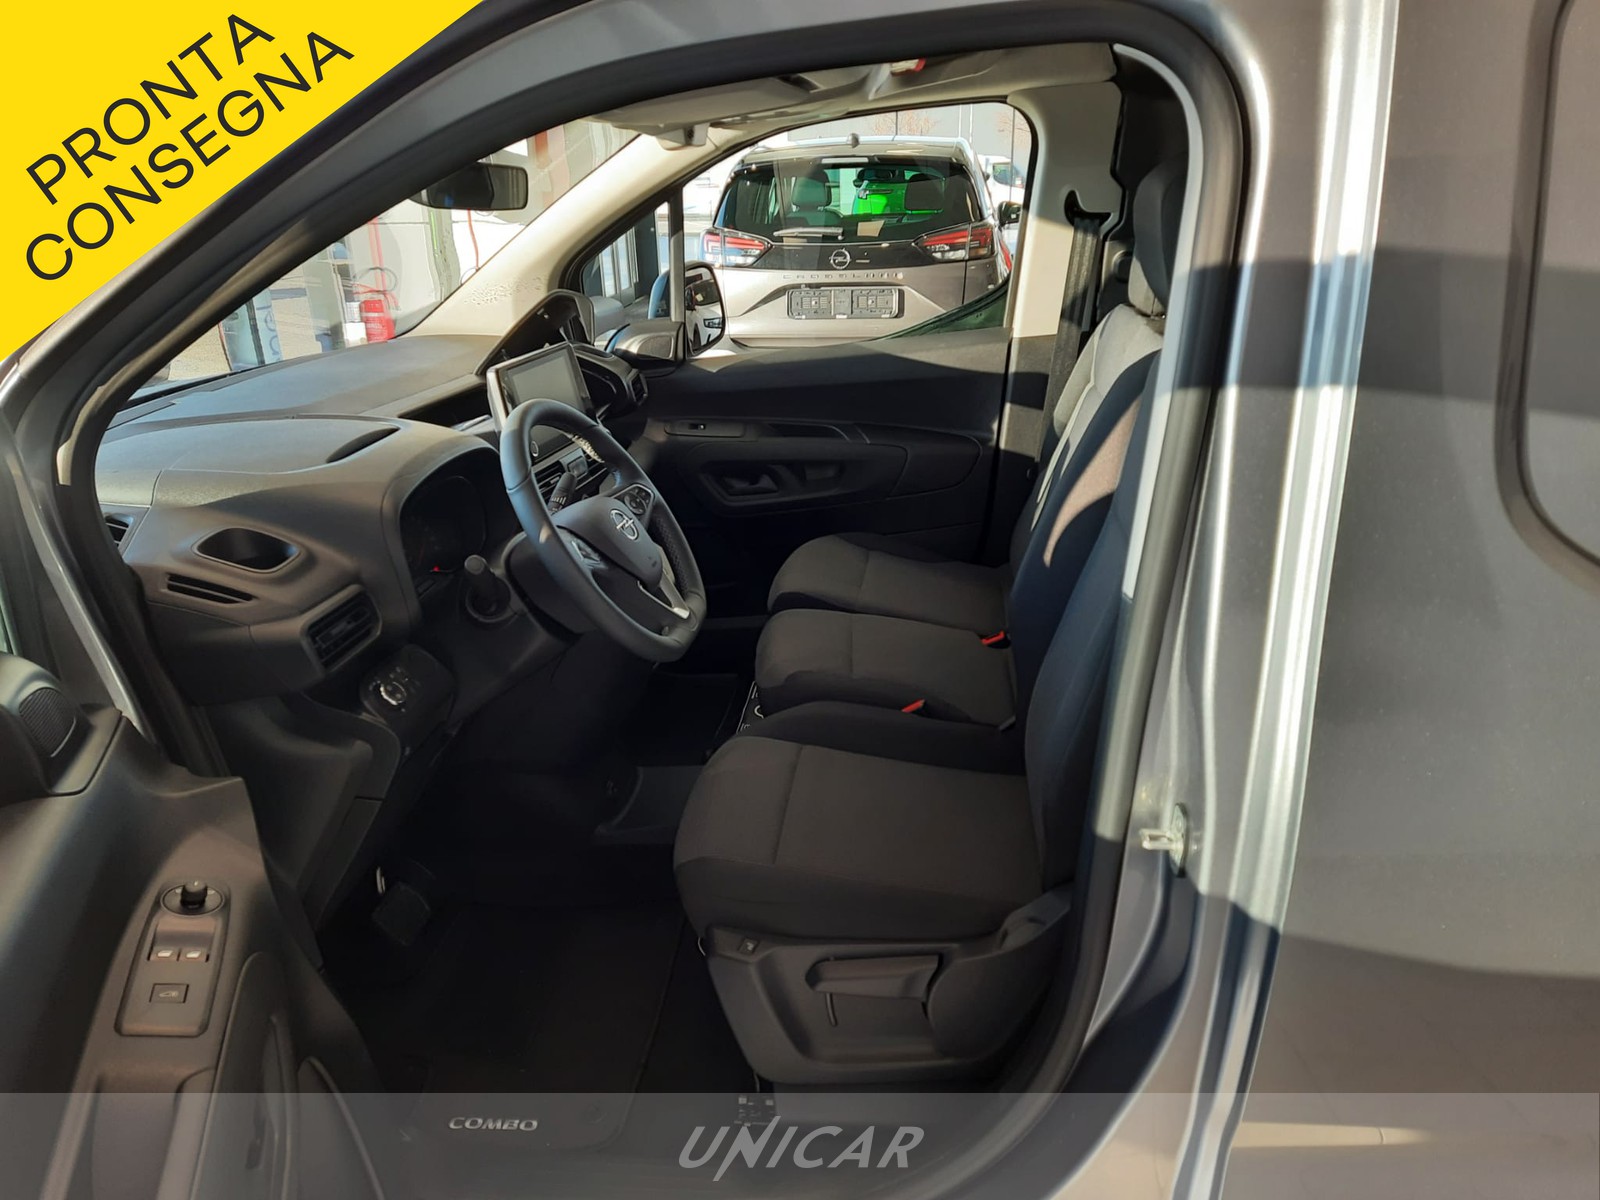 UNICAR Opel Combo Cargo